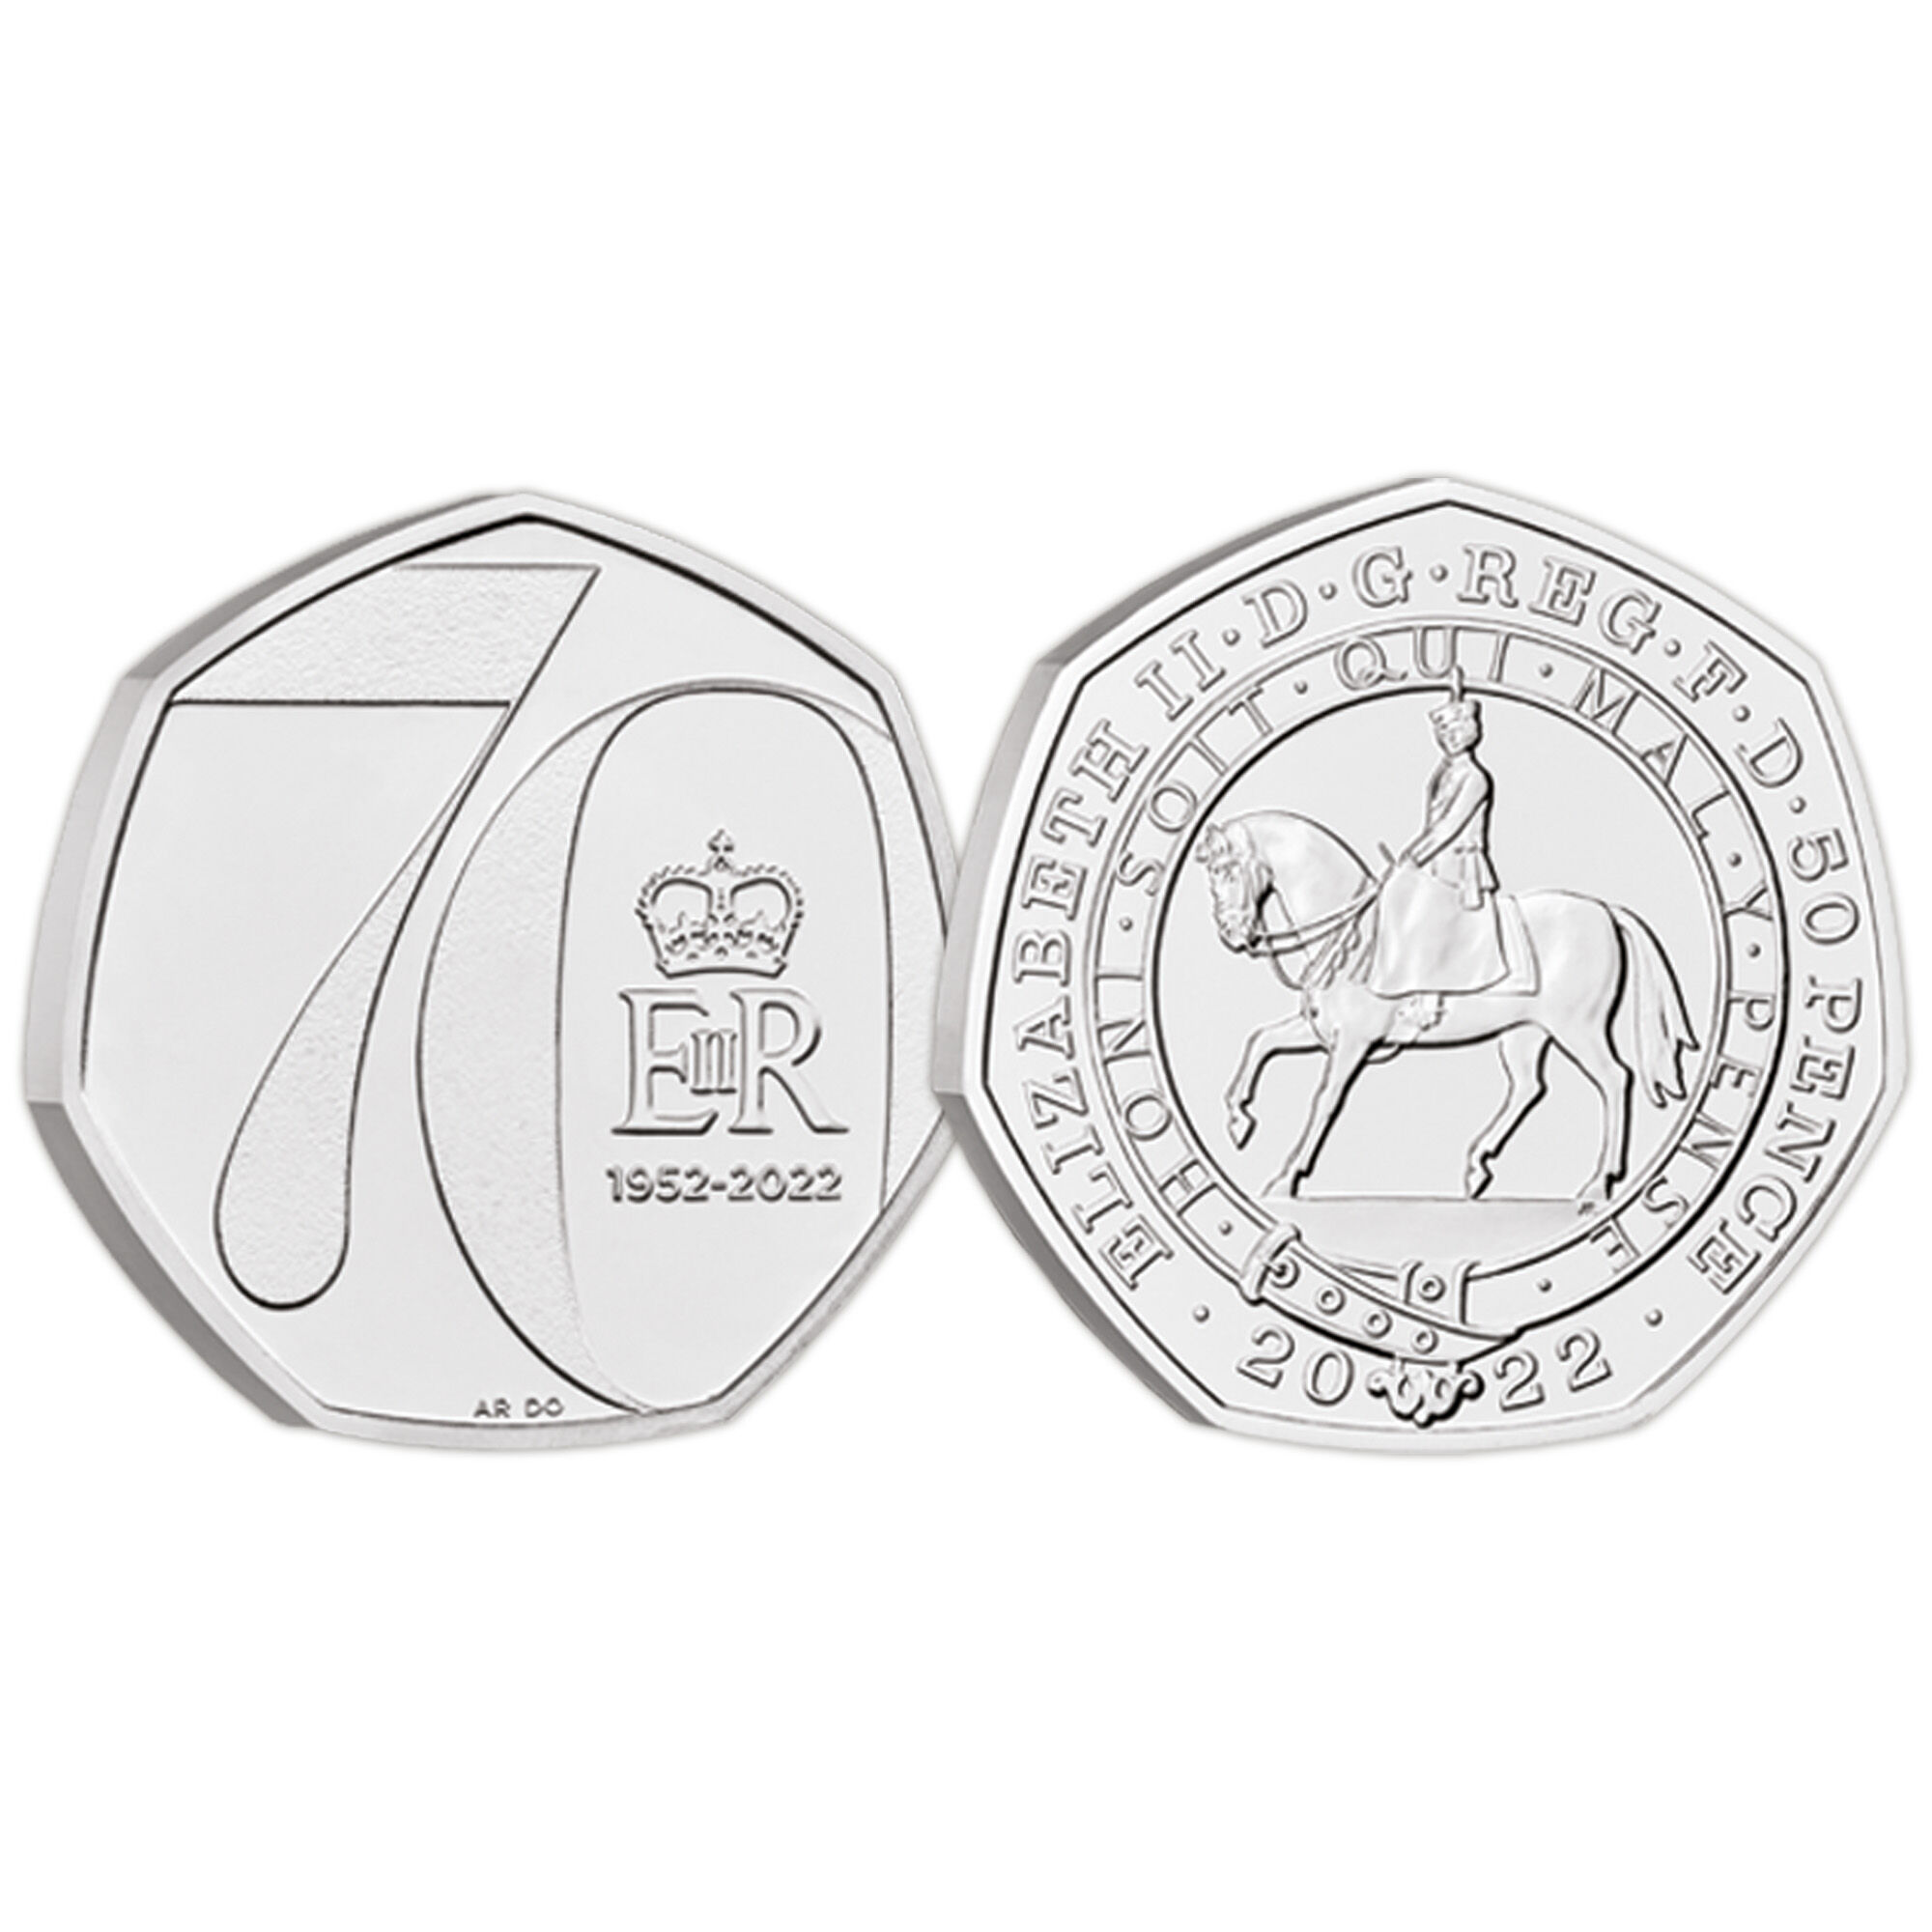 official tributes to queen elizabeth platinum jubilee QPJ b Coin